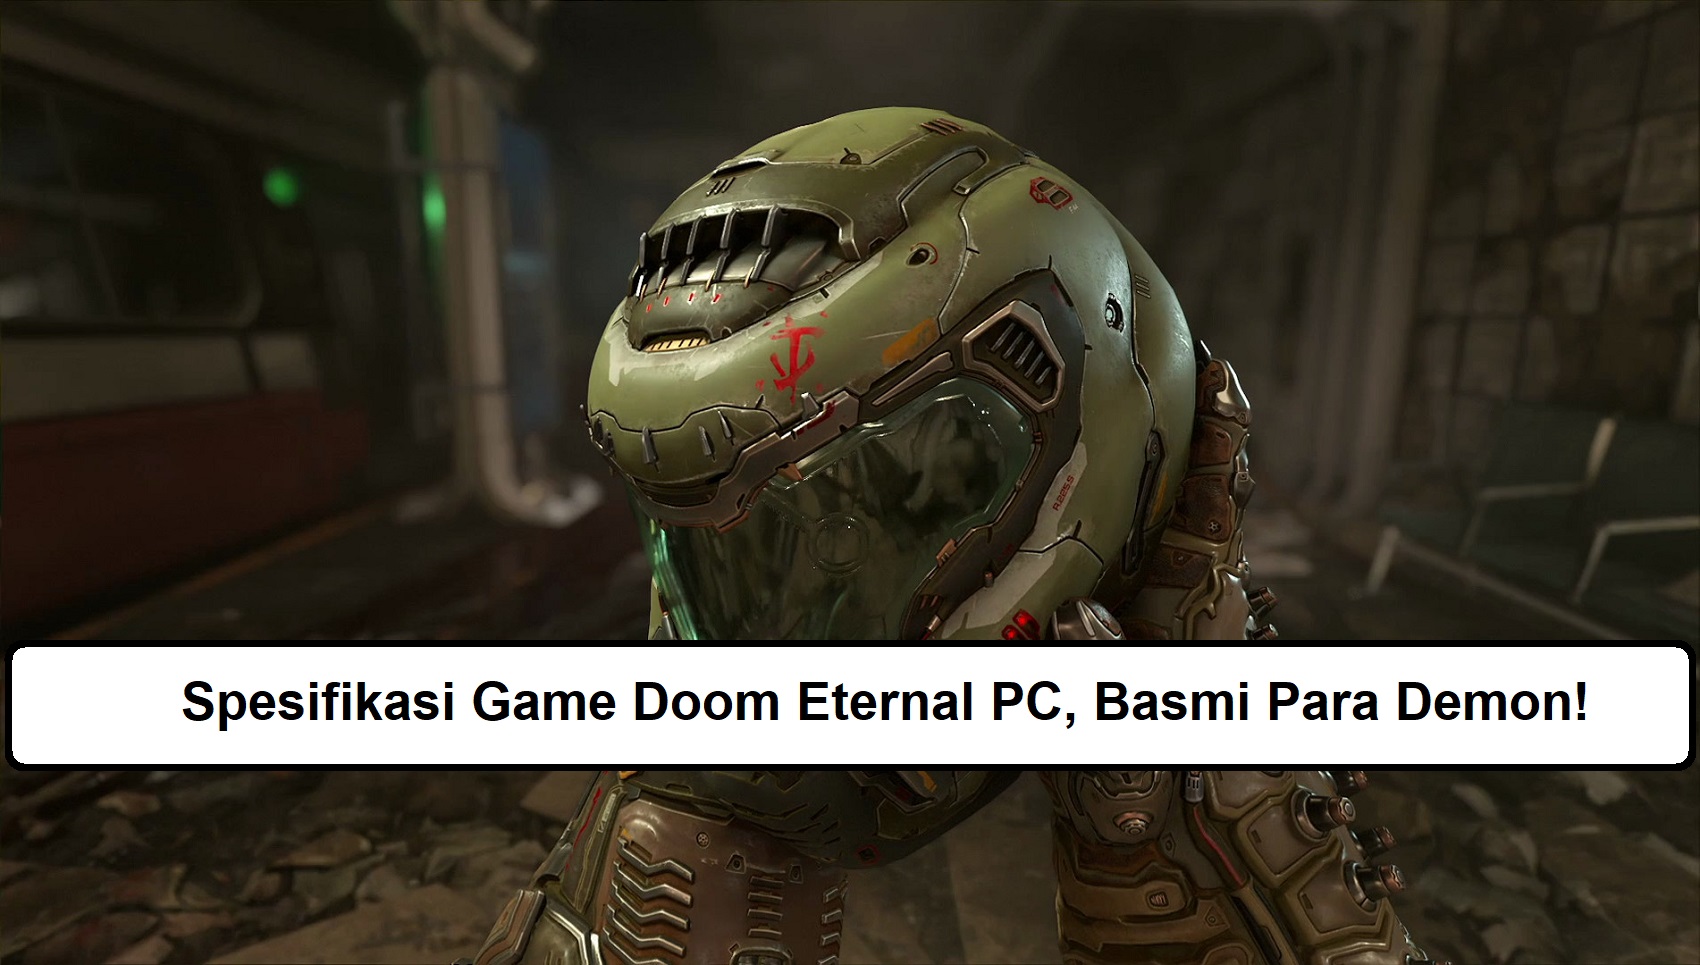 Spesifikasi Game Doom Eternal PC, Basmi Para Demon!